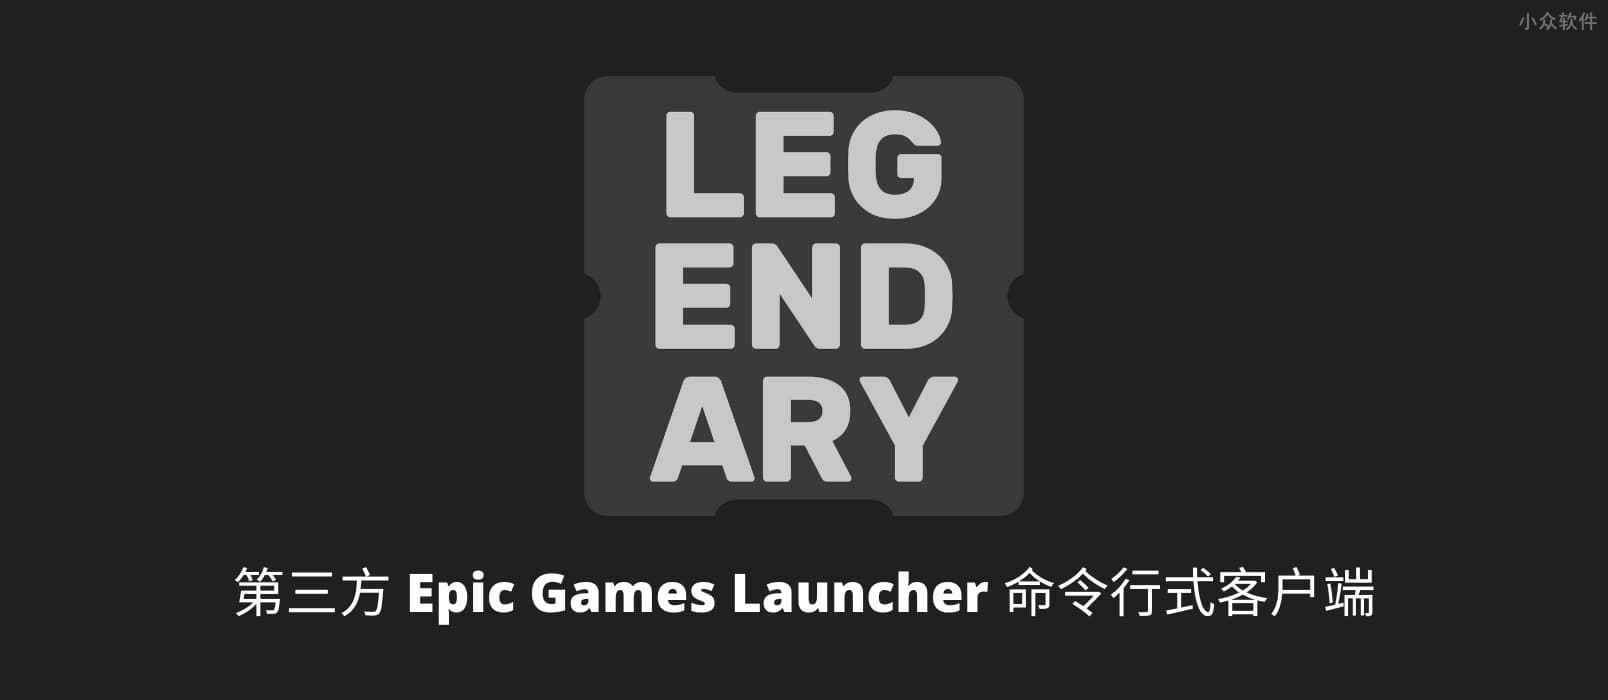 Legendary – 第三方 Epic Games Launcher 客户端，可下载、安装、更新游戏及 DLC，同步云存档